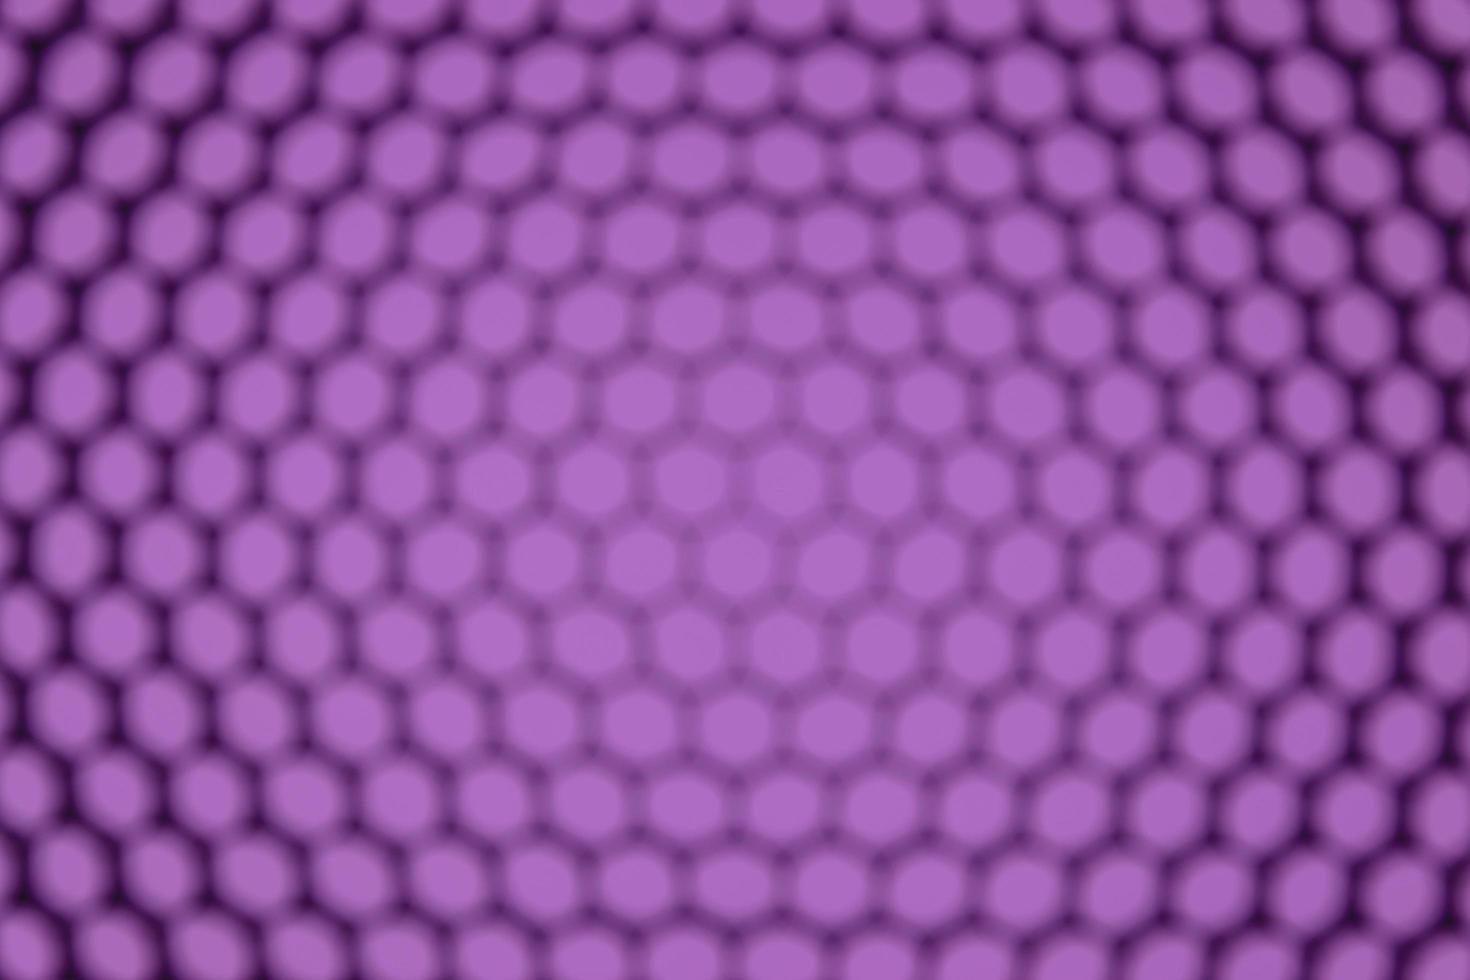 Panel of blurred purple LED lighting photo